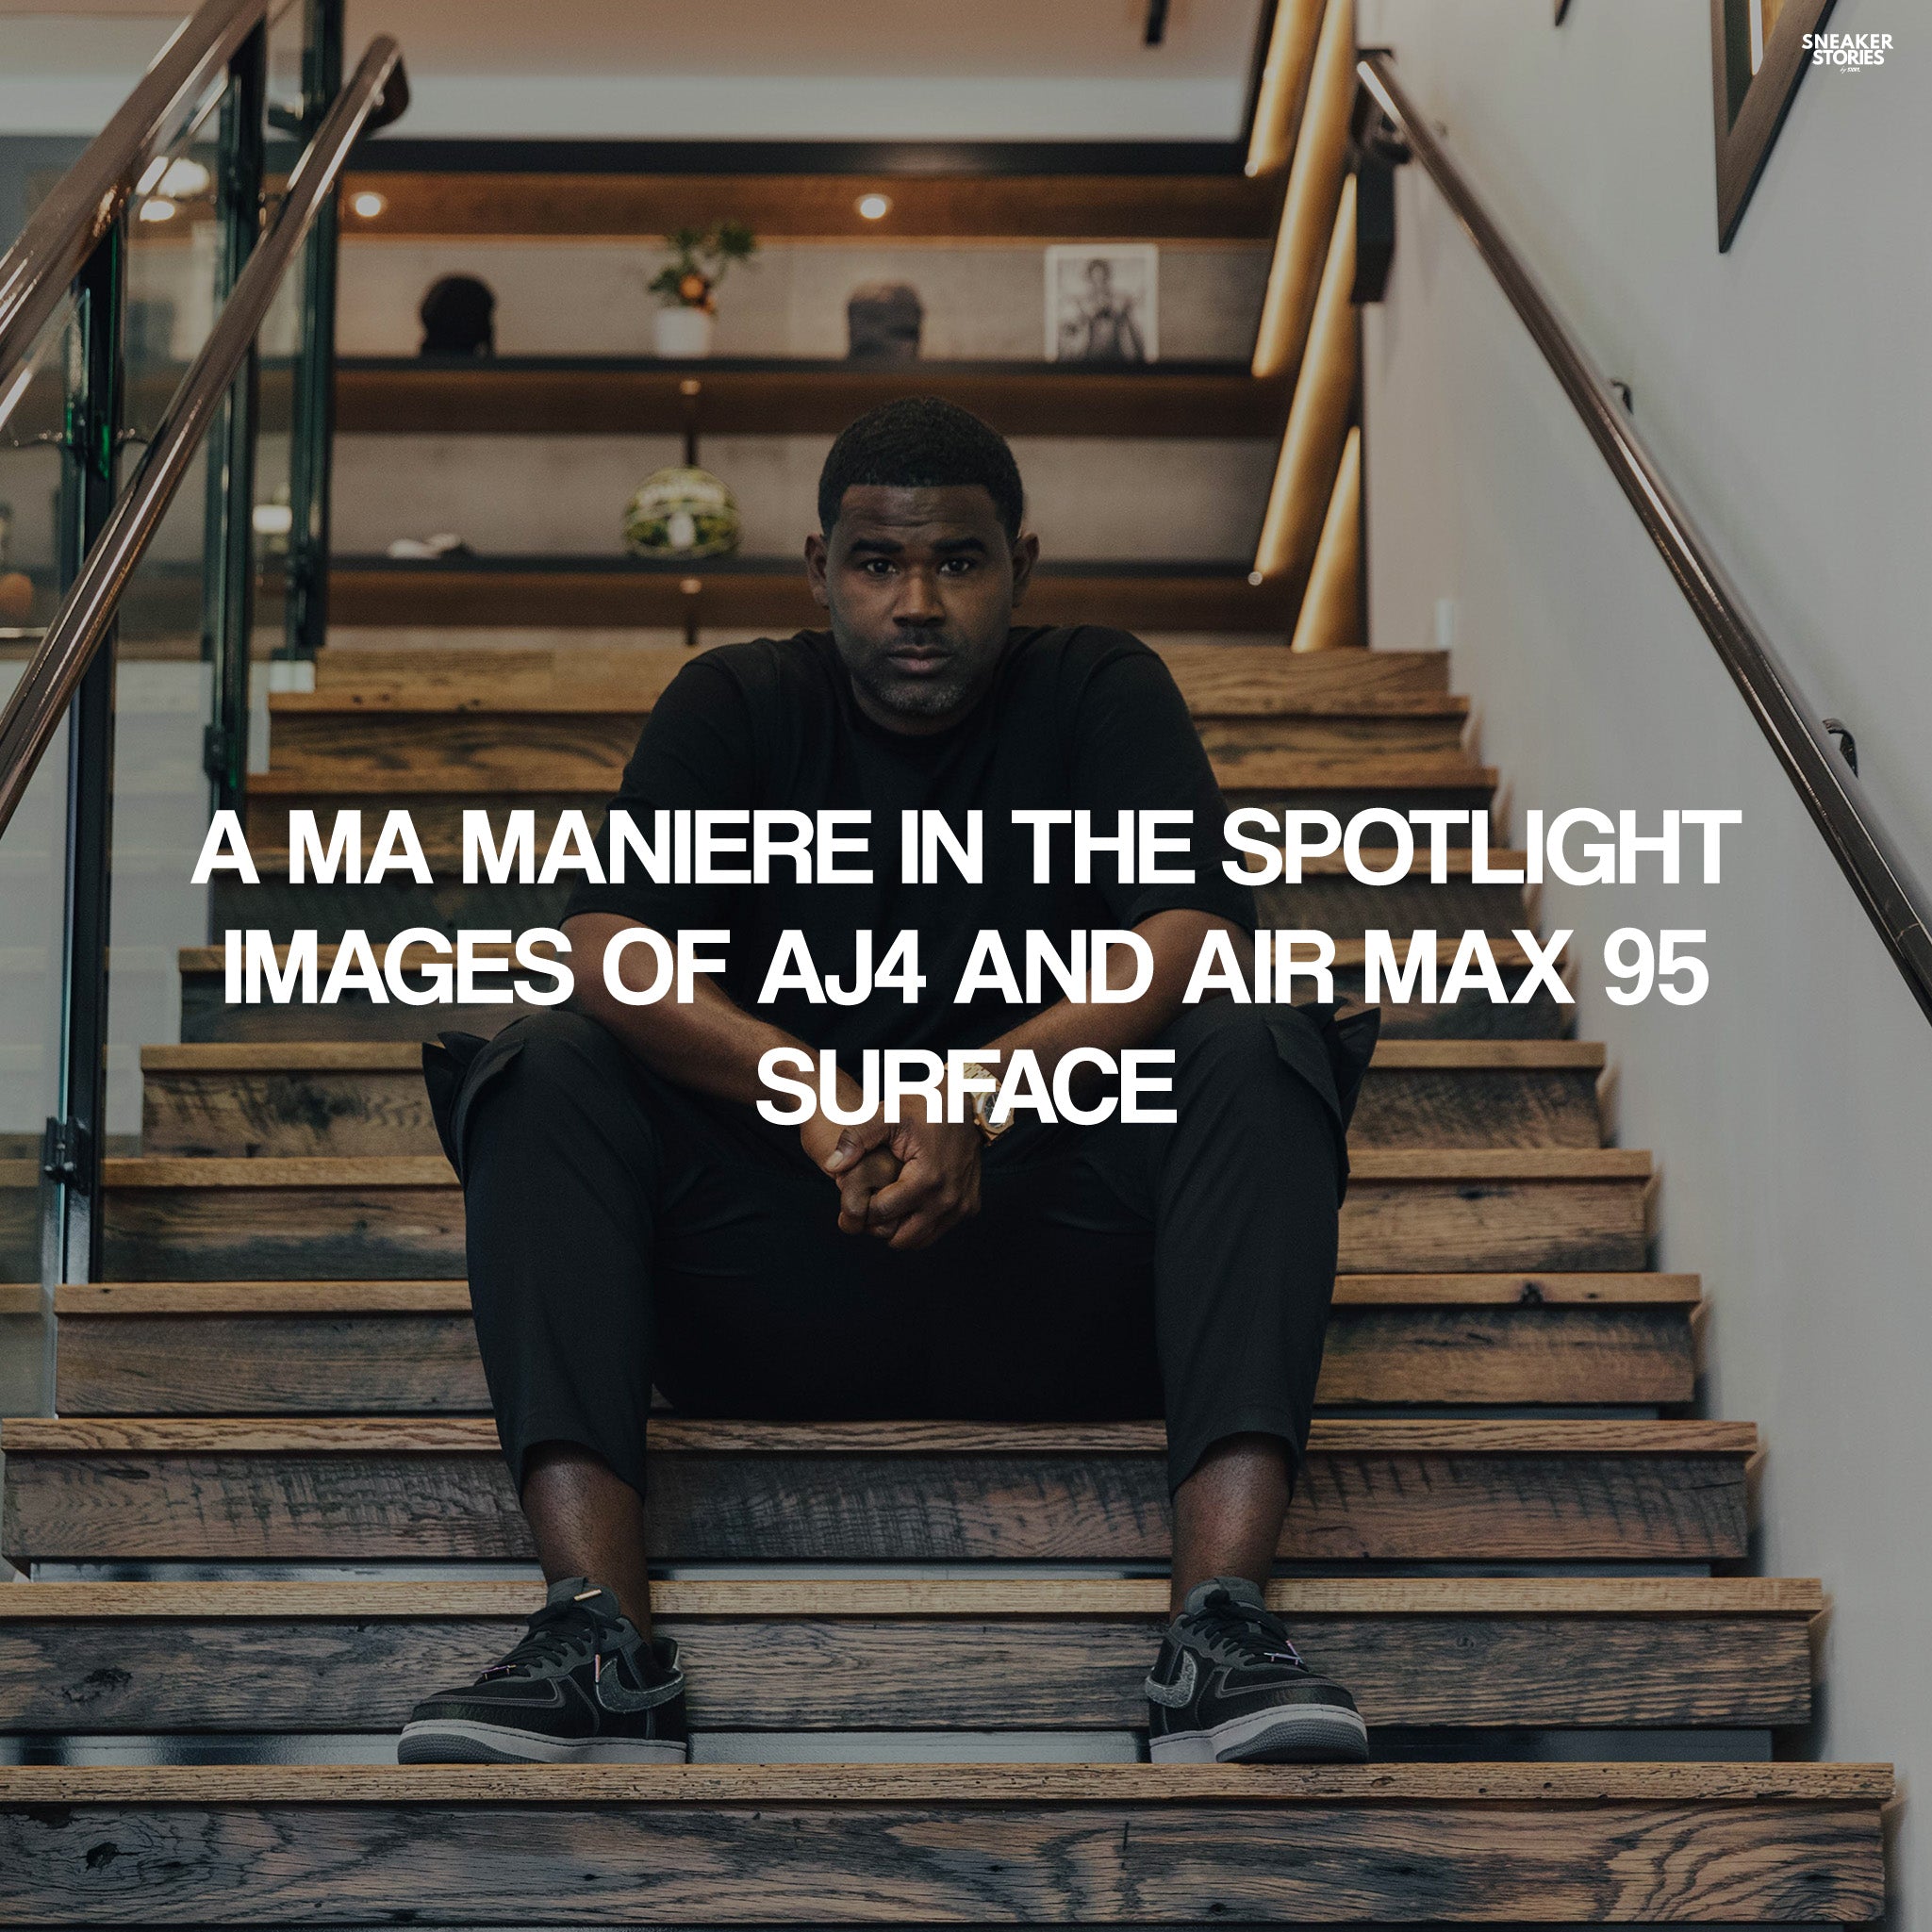 Images of Air Jordan 4 and Air max 95 surface